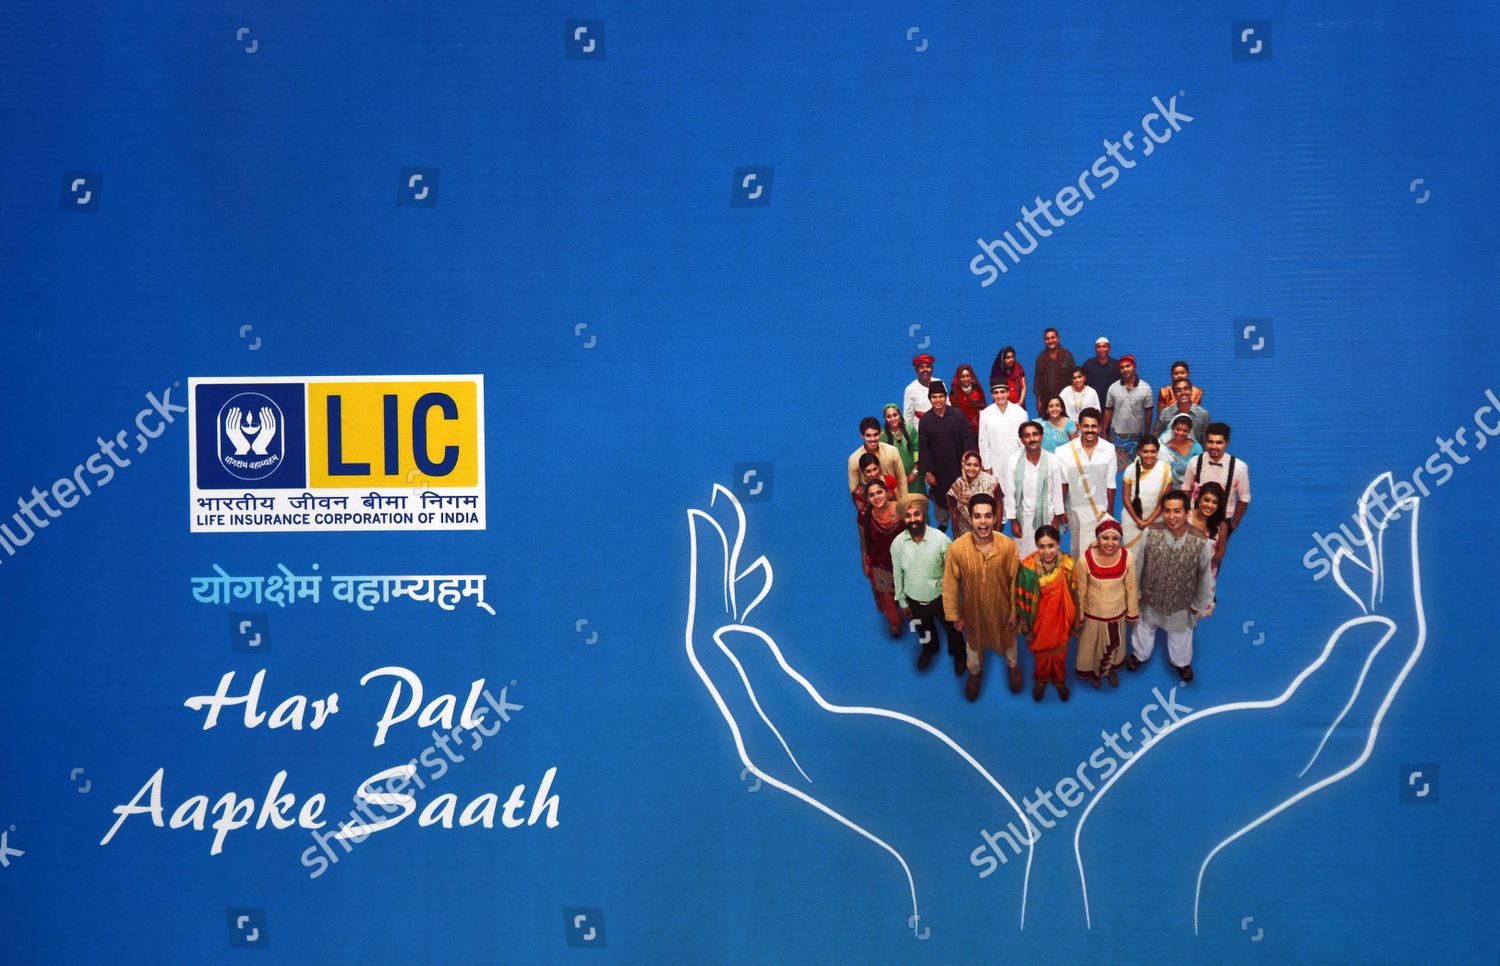 Life Insurance Corporation India Lic Poster Editorial Stock Photo ...